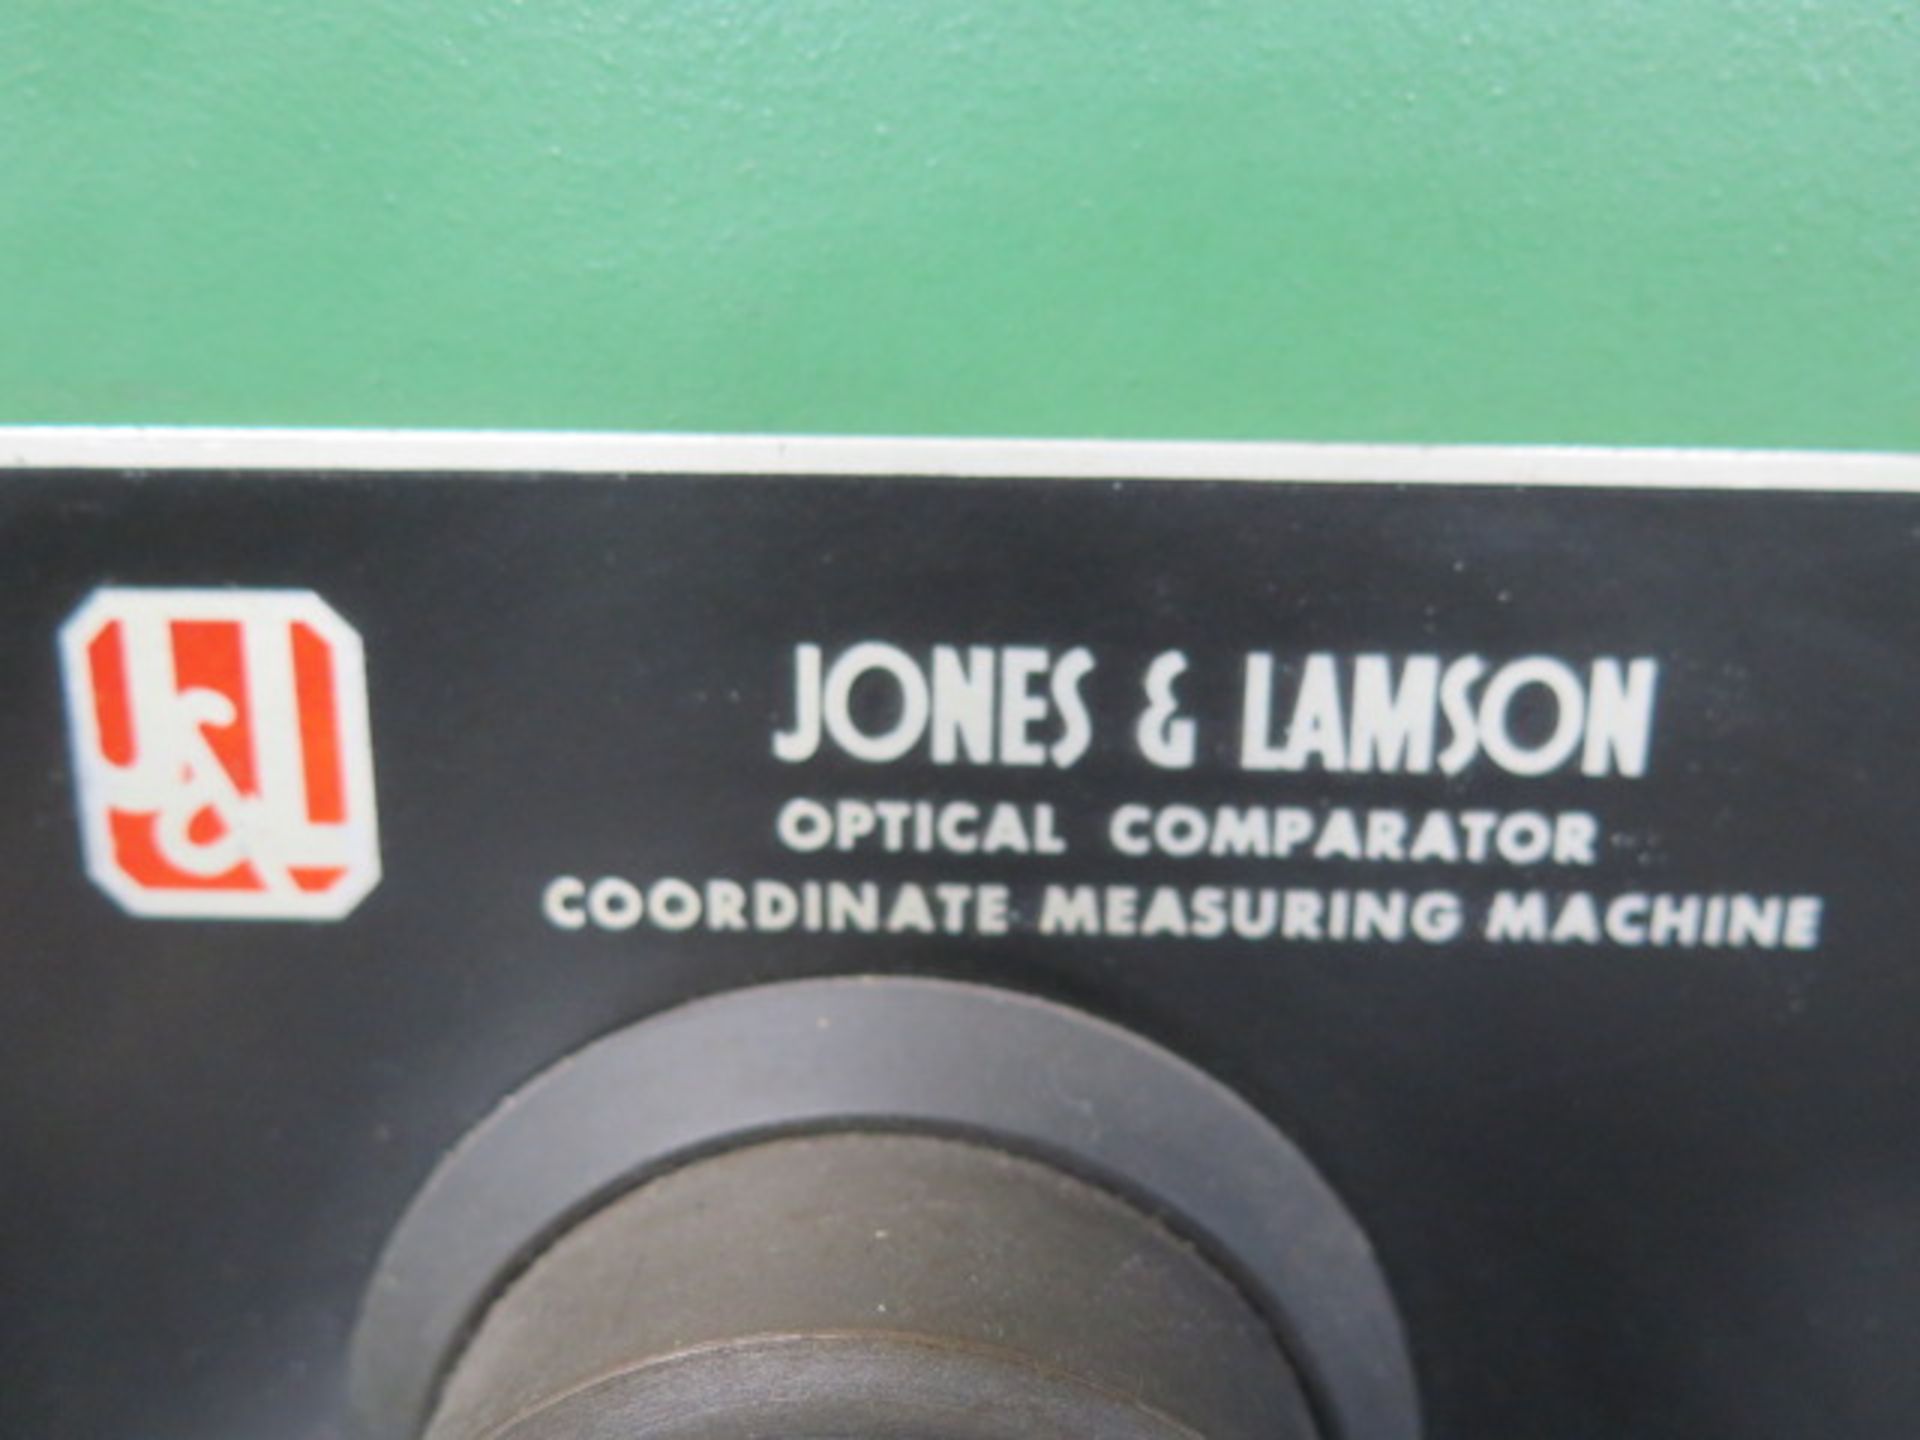 Jones & Lamson EPIC 14 14” Optical Comparator s/n 662015 w/ Quadra-Chek 2000 Prog DRO, SOLD AS IS - Image 12 of 12